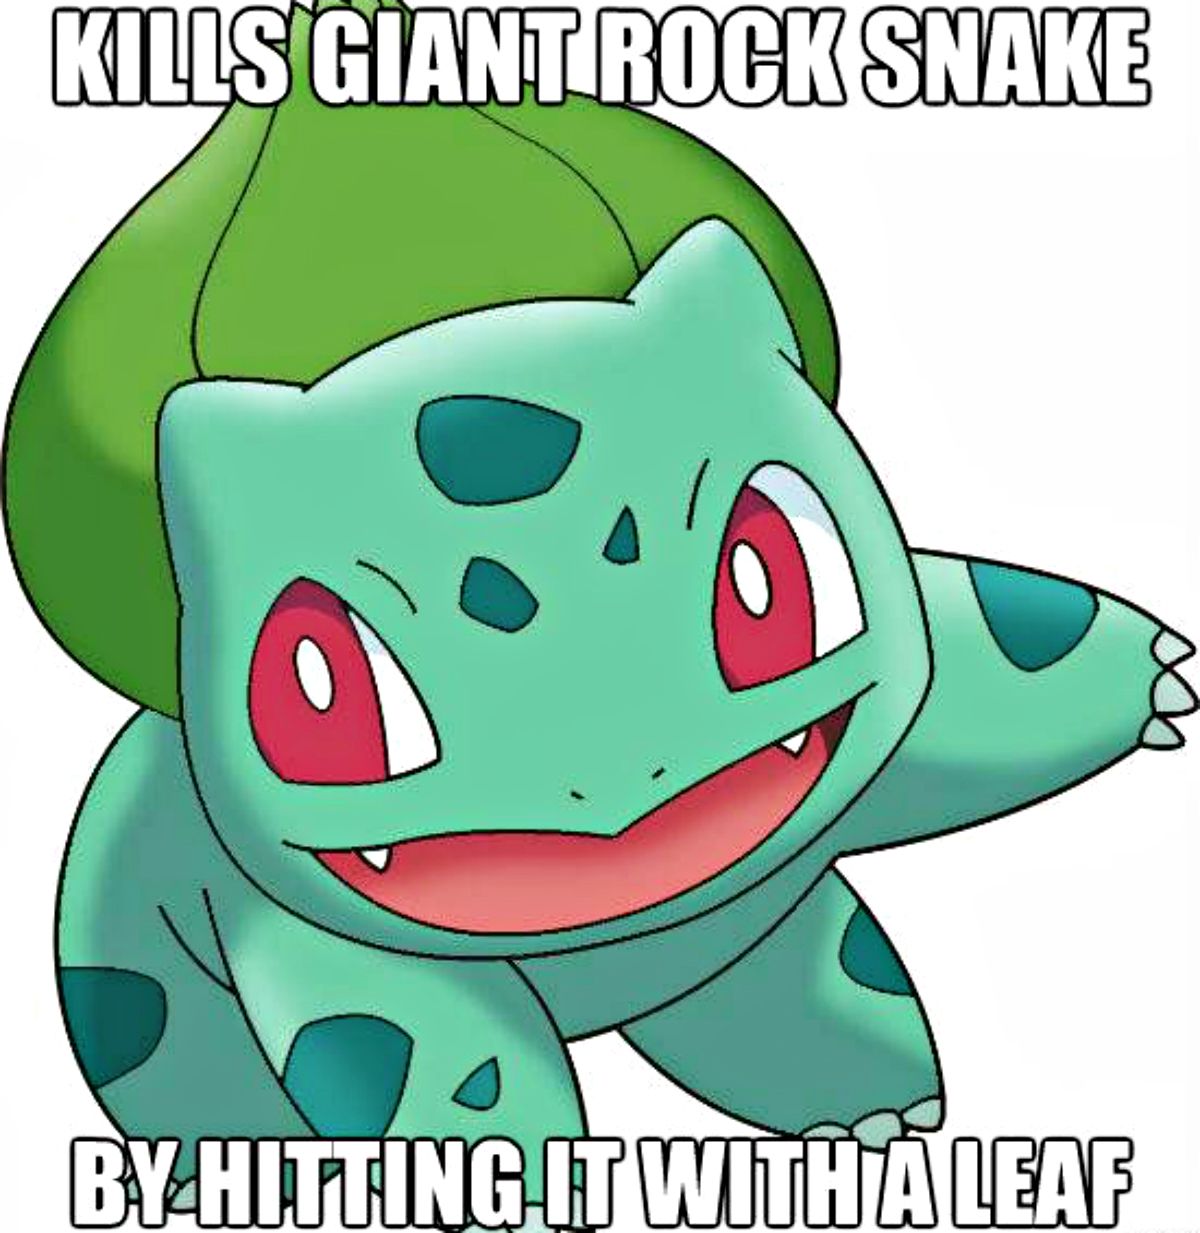 25 Pokémon Logic Memes That Are Hilariously True